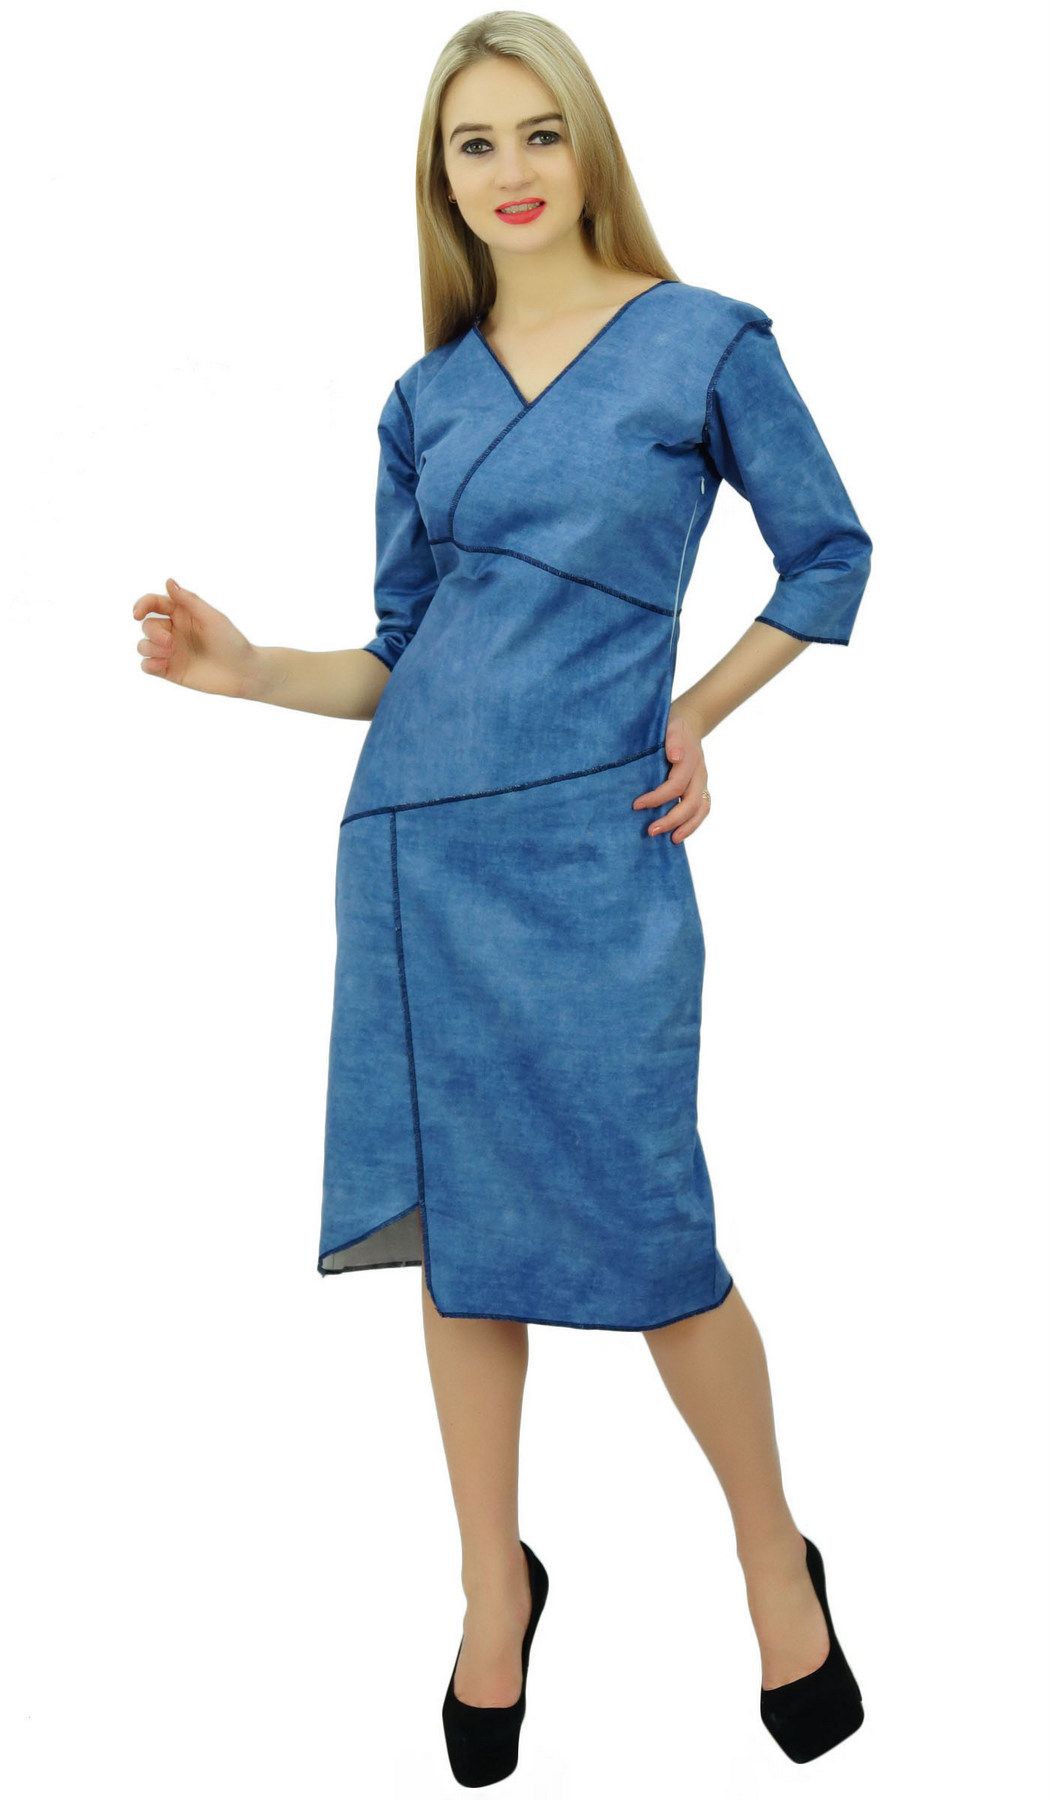 Bimba Femme Bleu Denim Robe Avec Poche Casual Cap manches chic-Zt2 